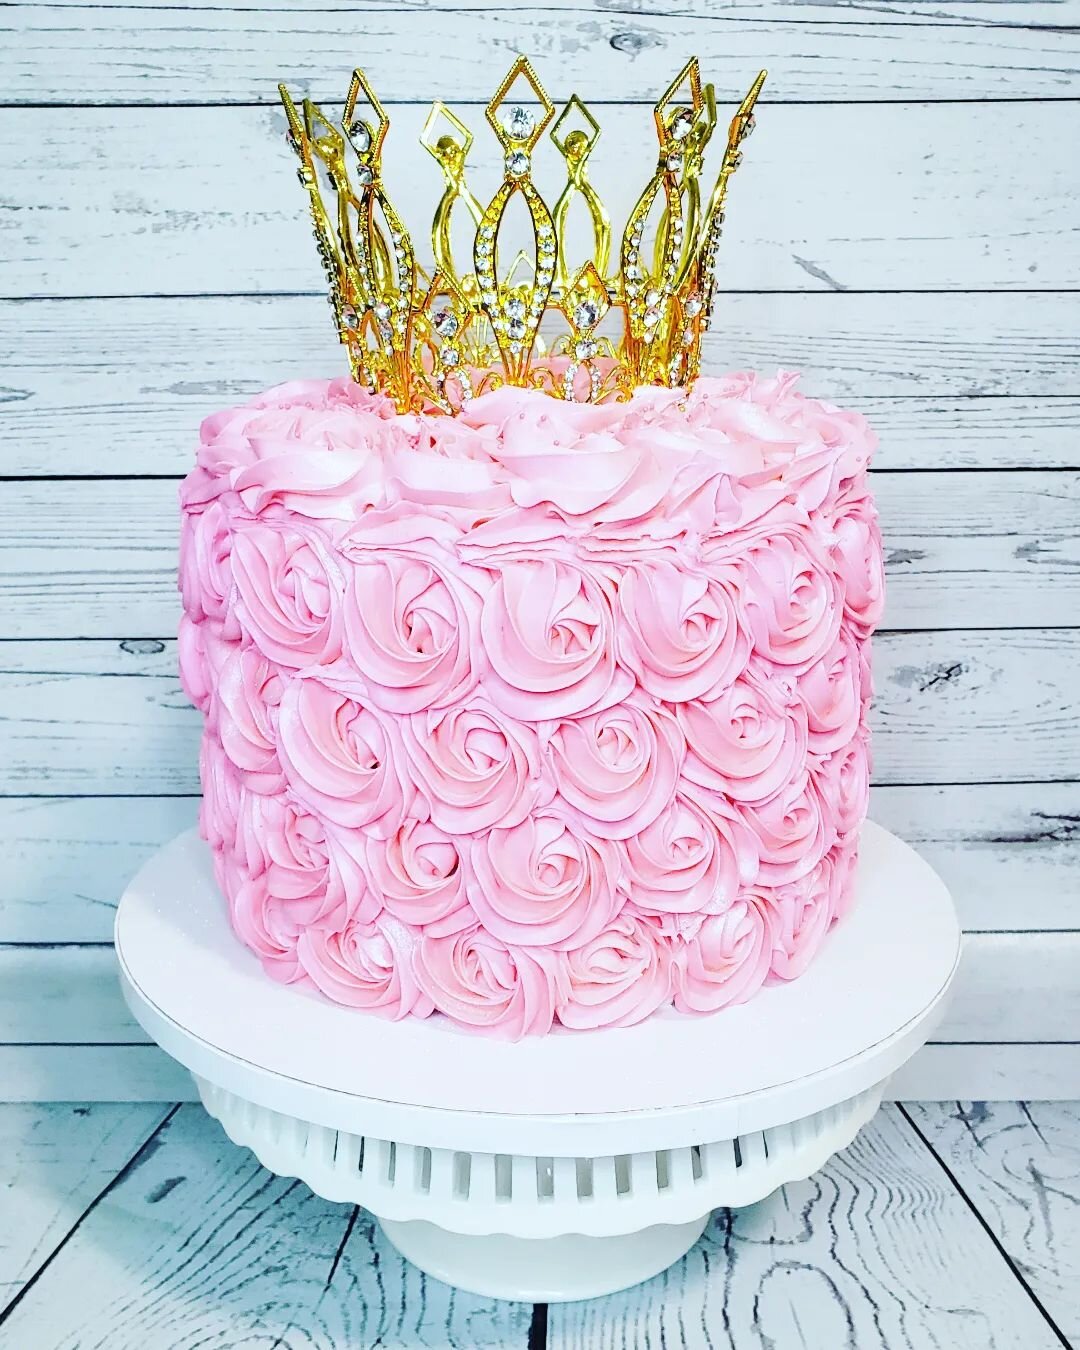 Have a WONDERFUL SWEET 16TH BIRTHDAY PARTY 🎉 🥳 🎂 #dessertfirstlady #dessertfirst #ieatdessertfirst #michiganbaker #michigancustomcakes #sweetsixteencake